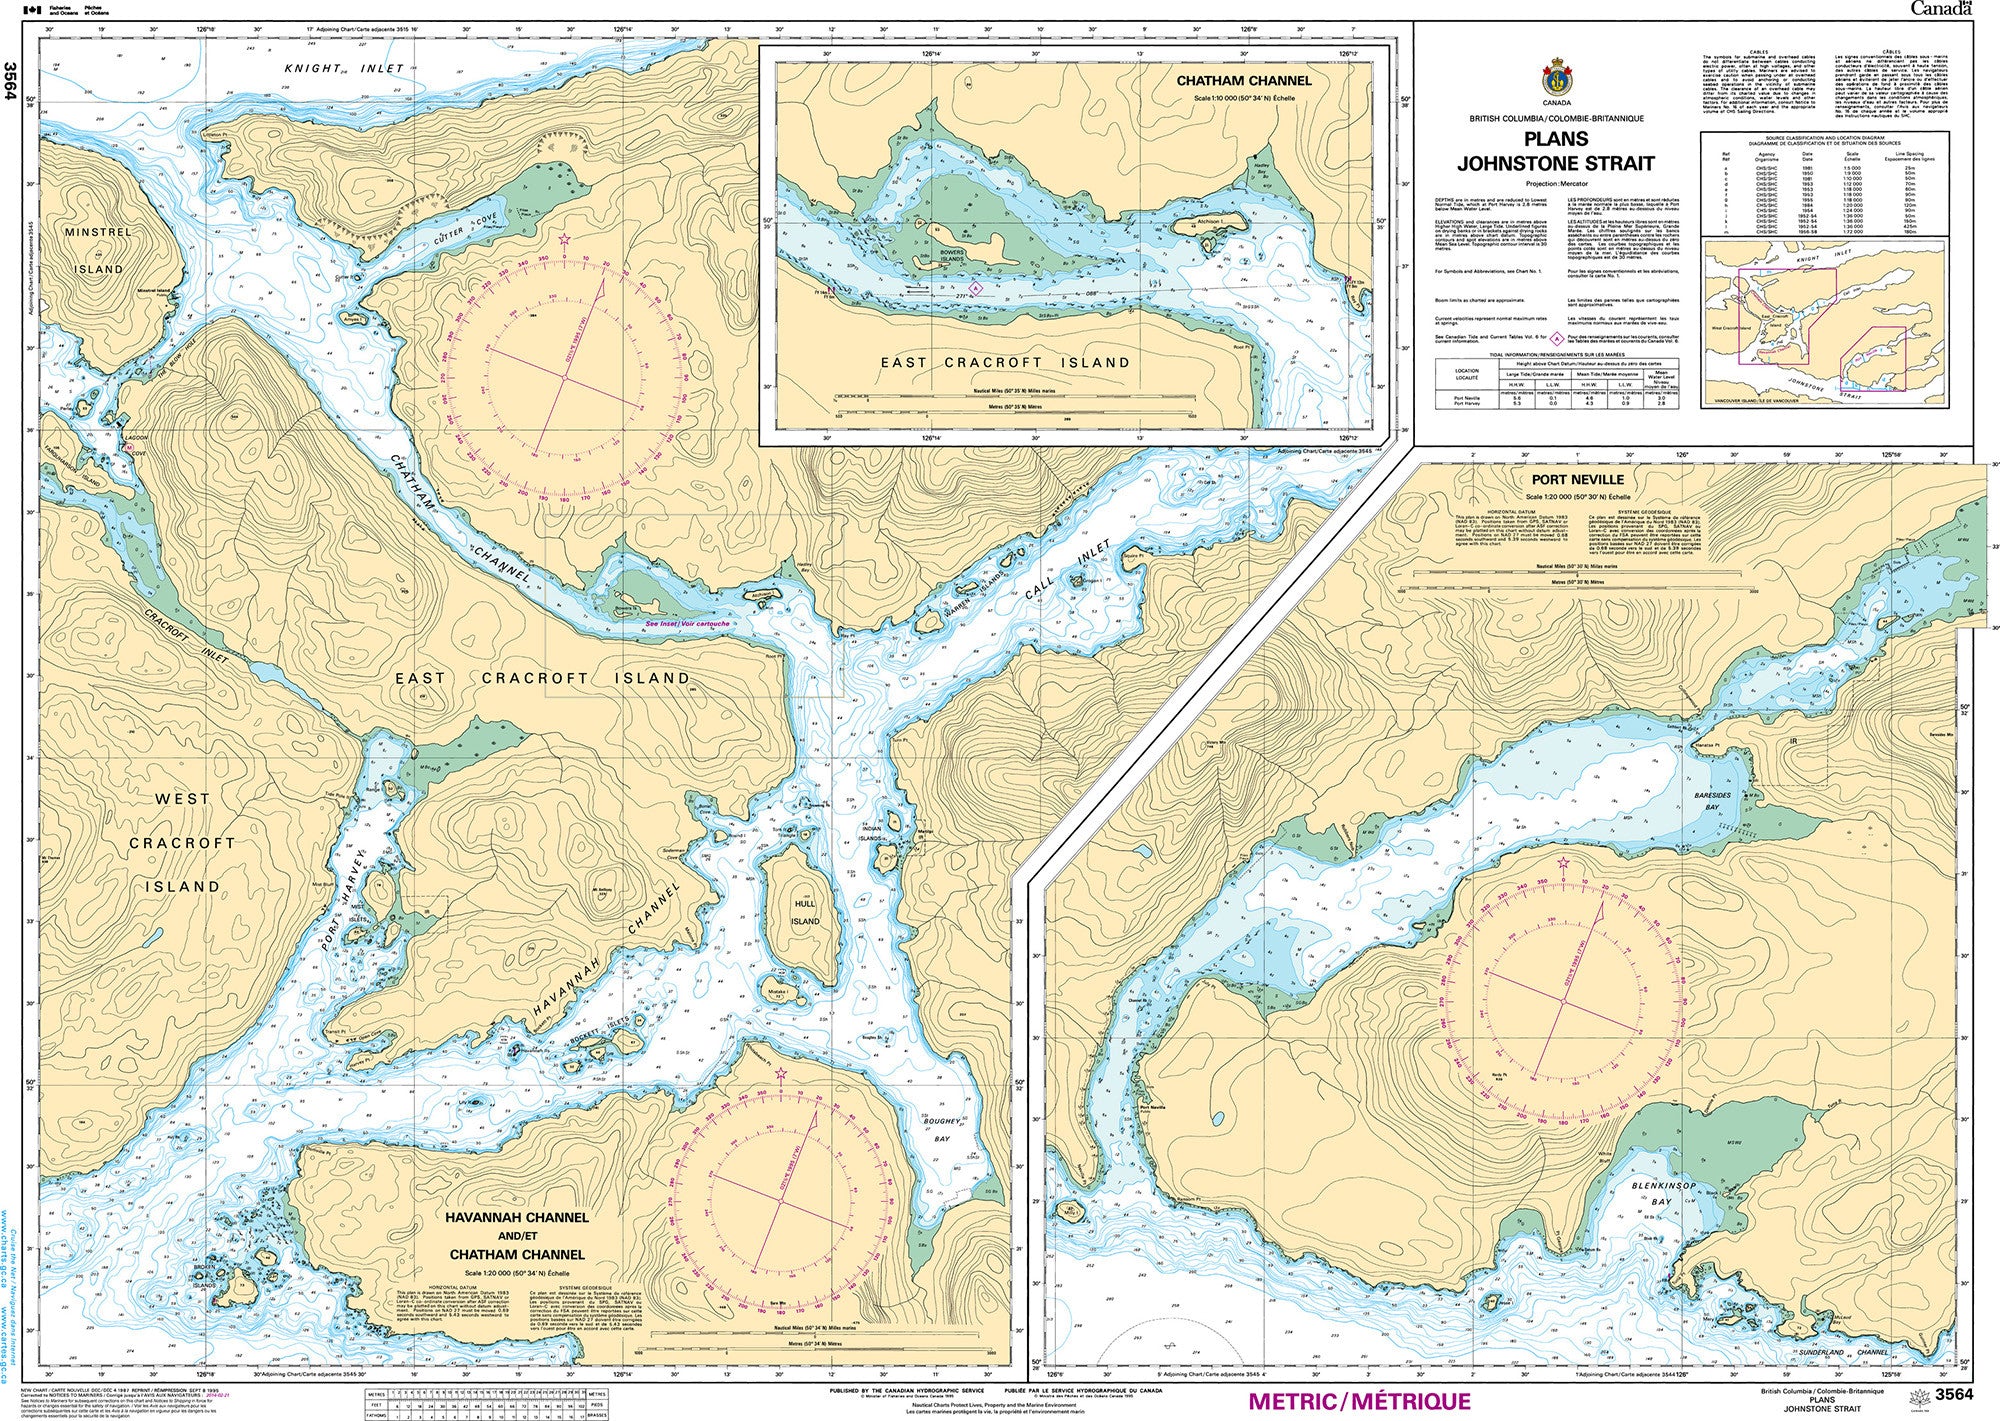 Canadian Hydrographic Service Nautical Chart CHS3564: Plans - Johnstone Strait